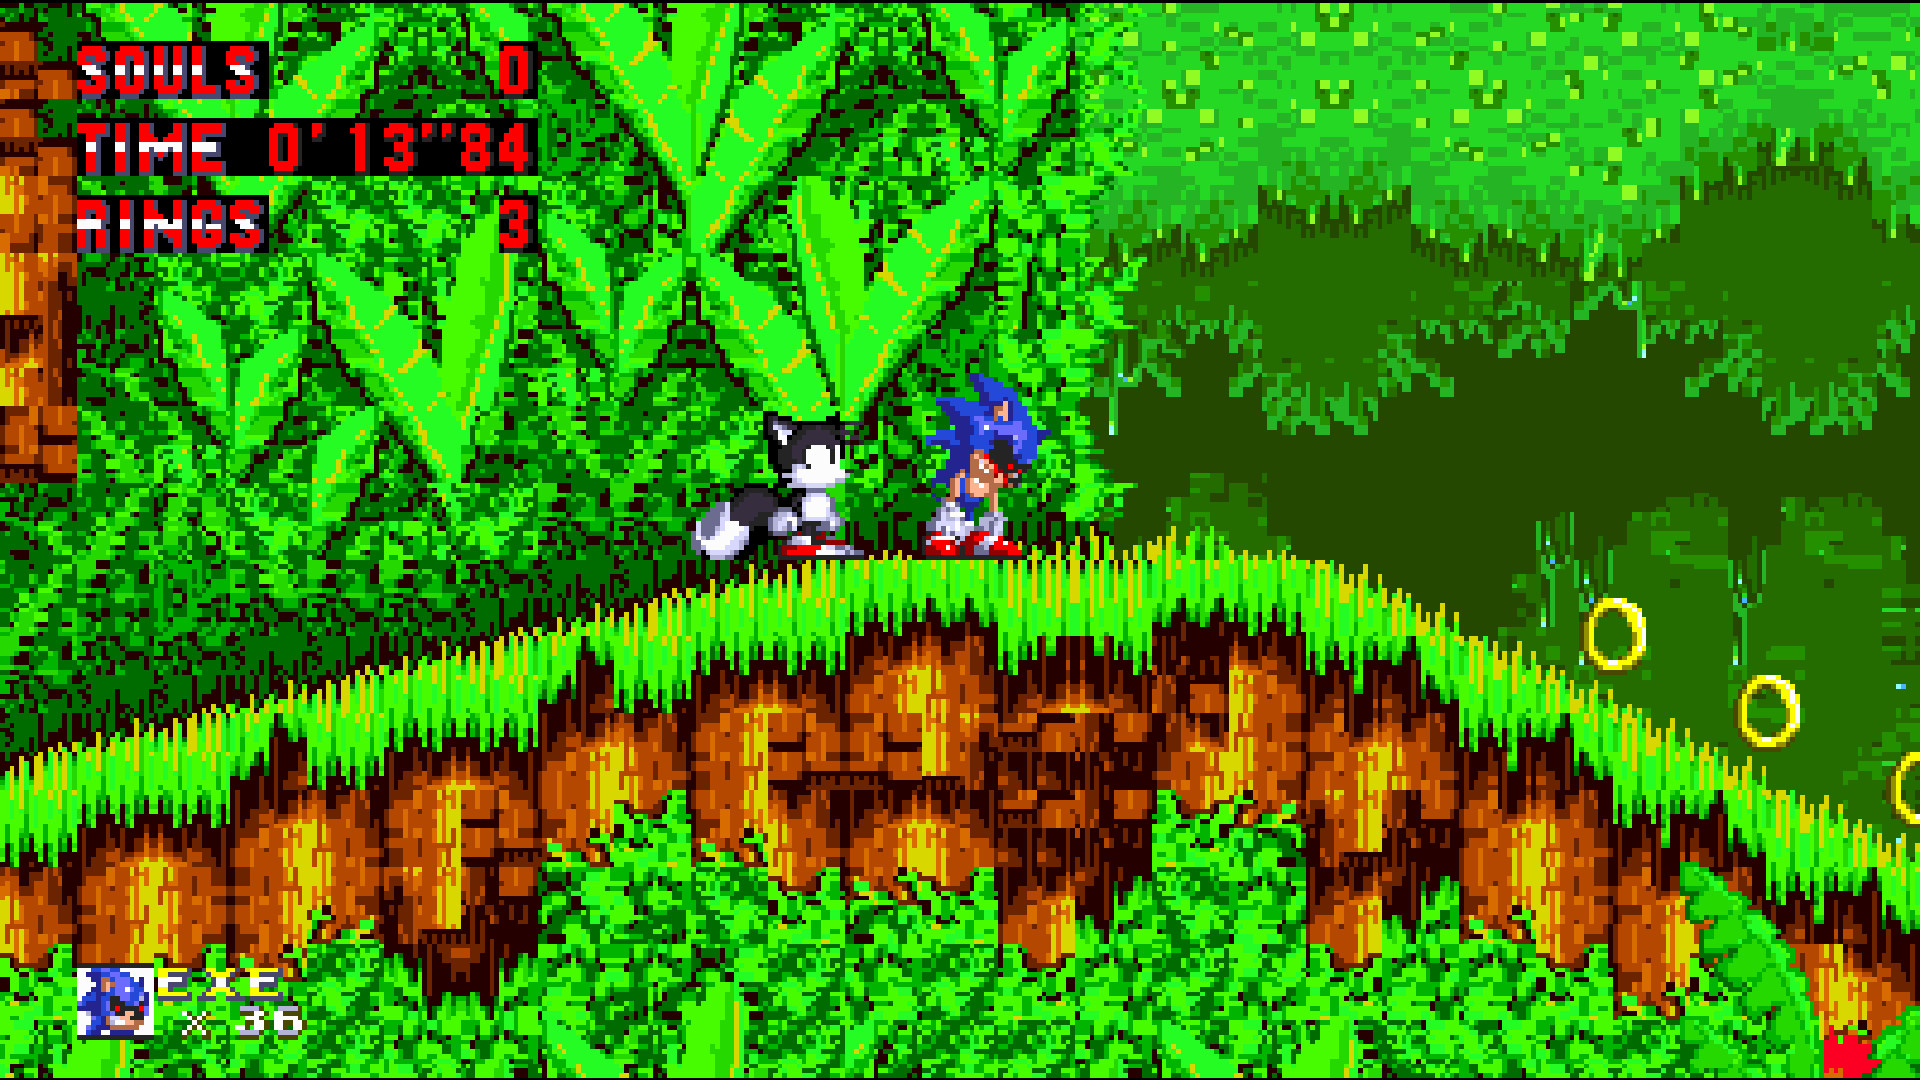 Sonic Exe Sonic Omt GIF - Sonic exe Sonic omt One last round